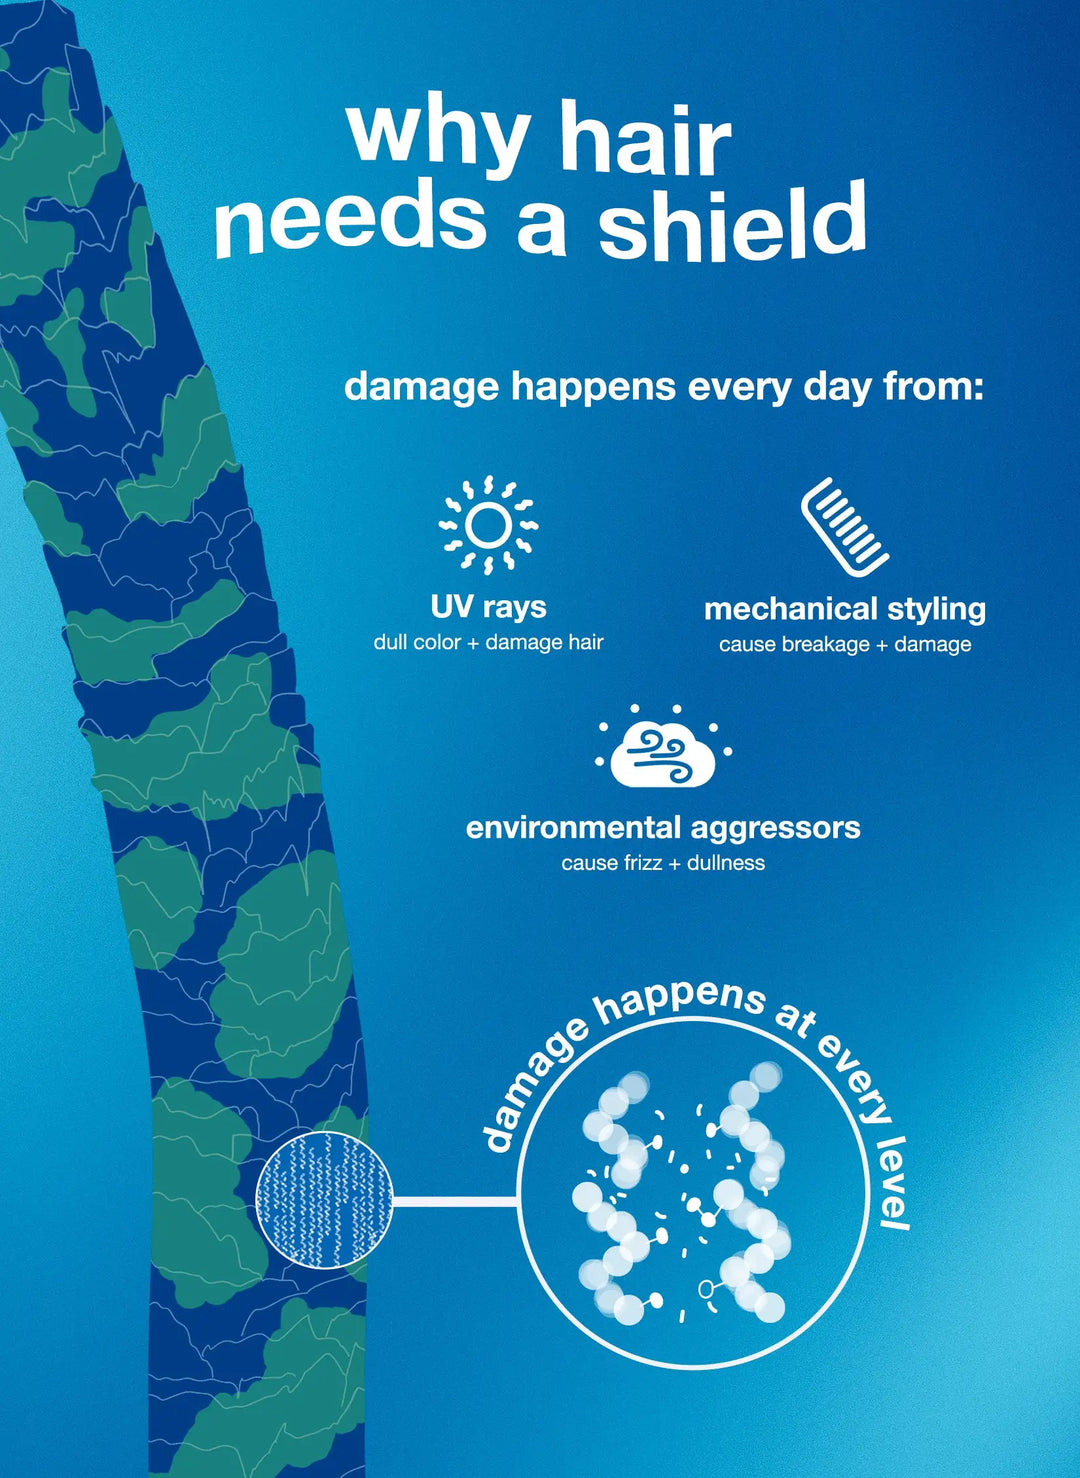 K18 Biomimetic Hairscience Damage Shield Protective Conditioner